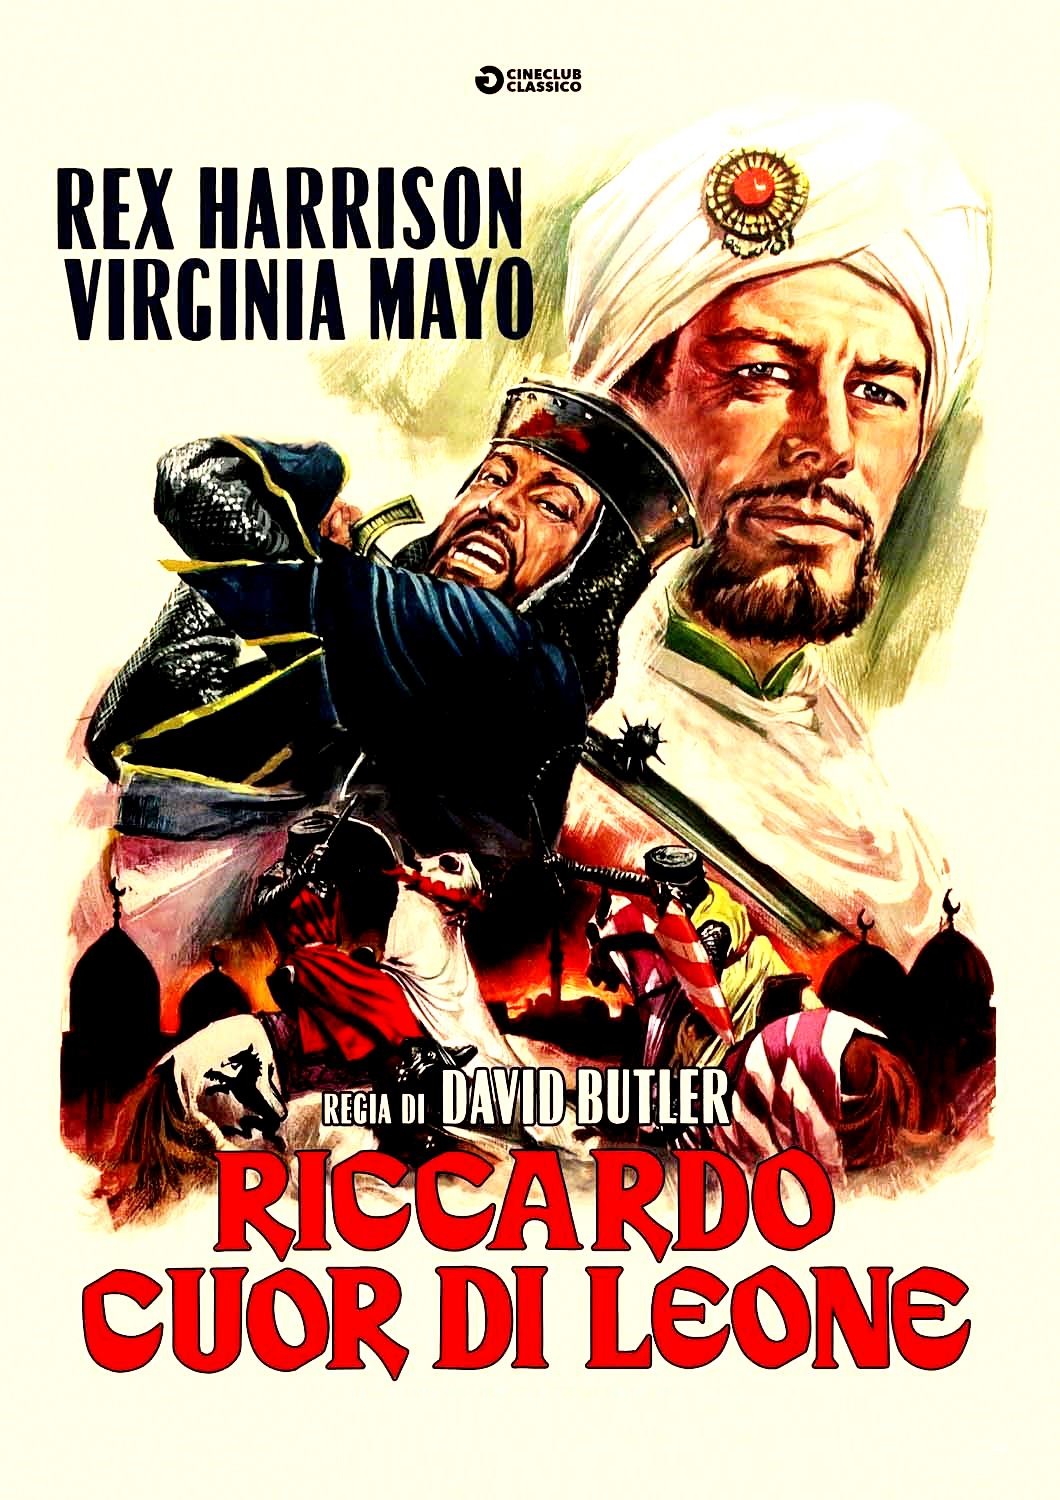 Riccardo Cuor di Leone (1954)